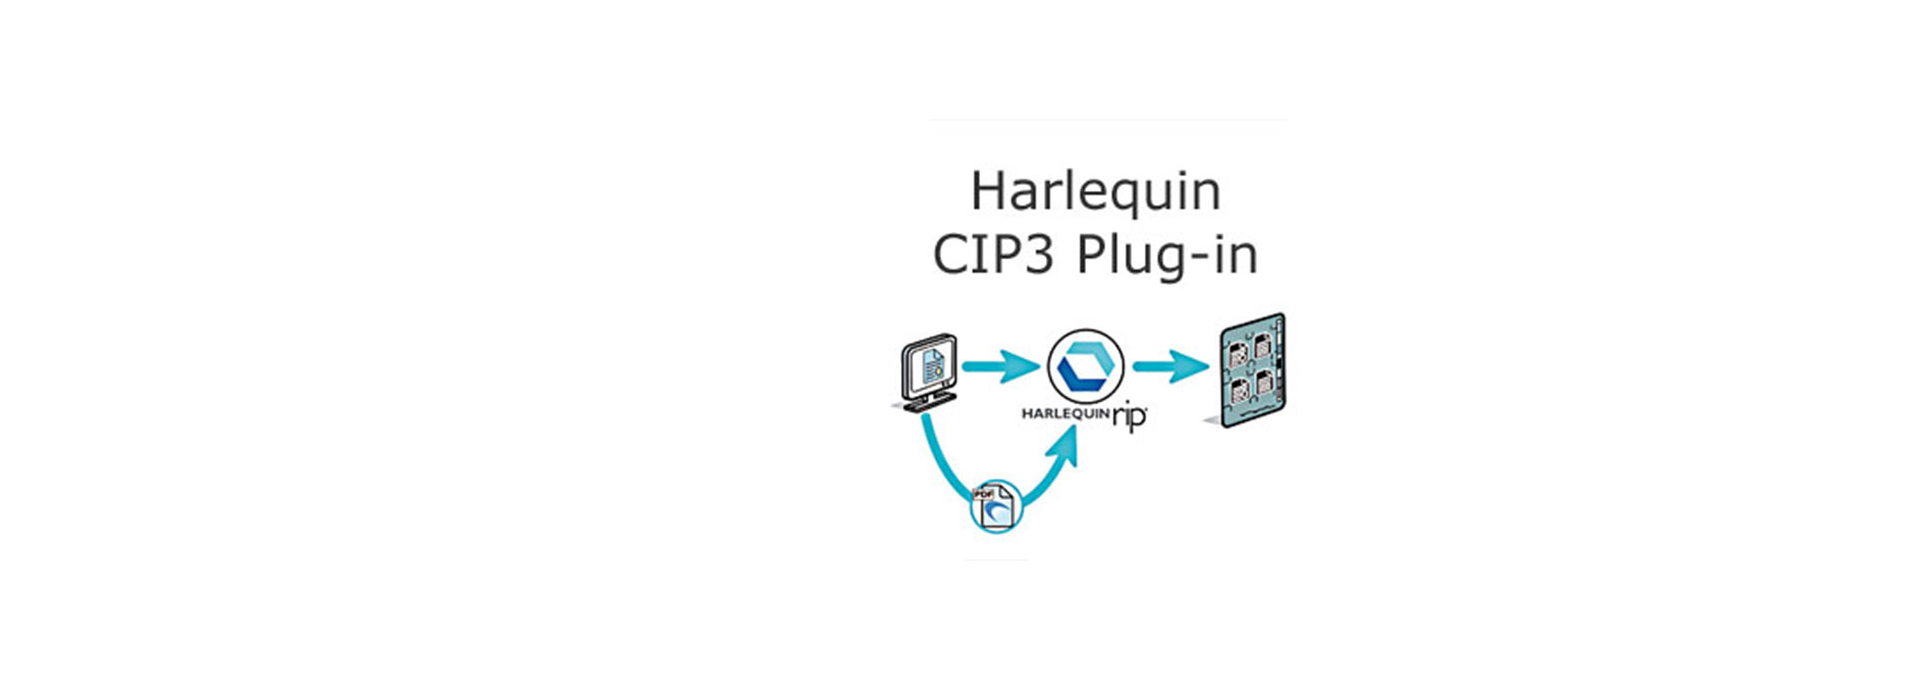 Harlequin CIP3 Plug-in